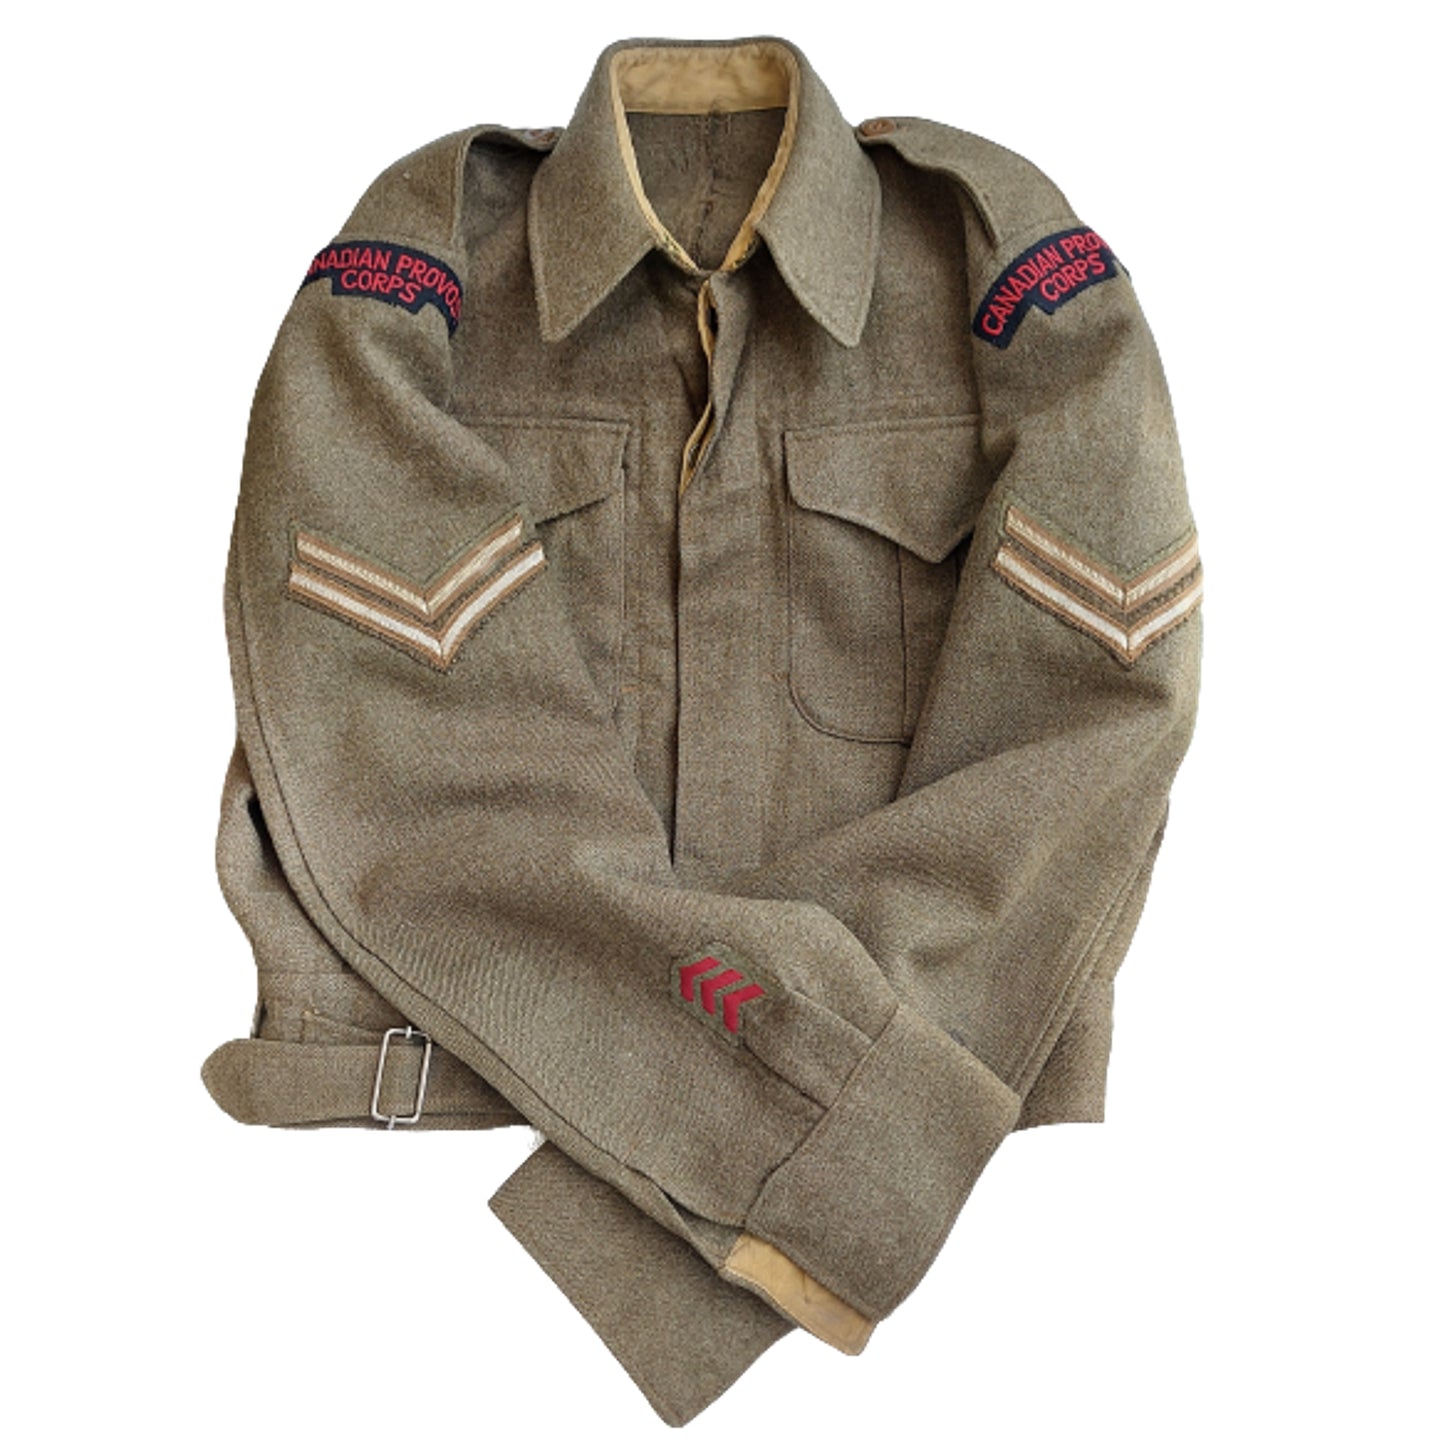 WW2 Canadian Provost Corps BD Battle Dress Tunic 1943 Size 16